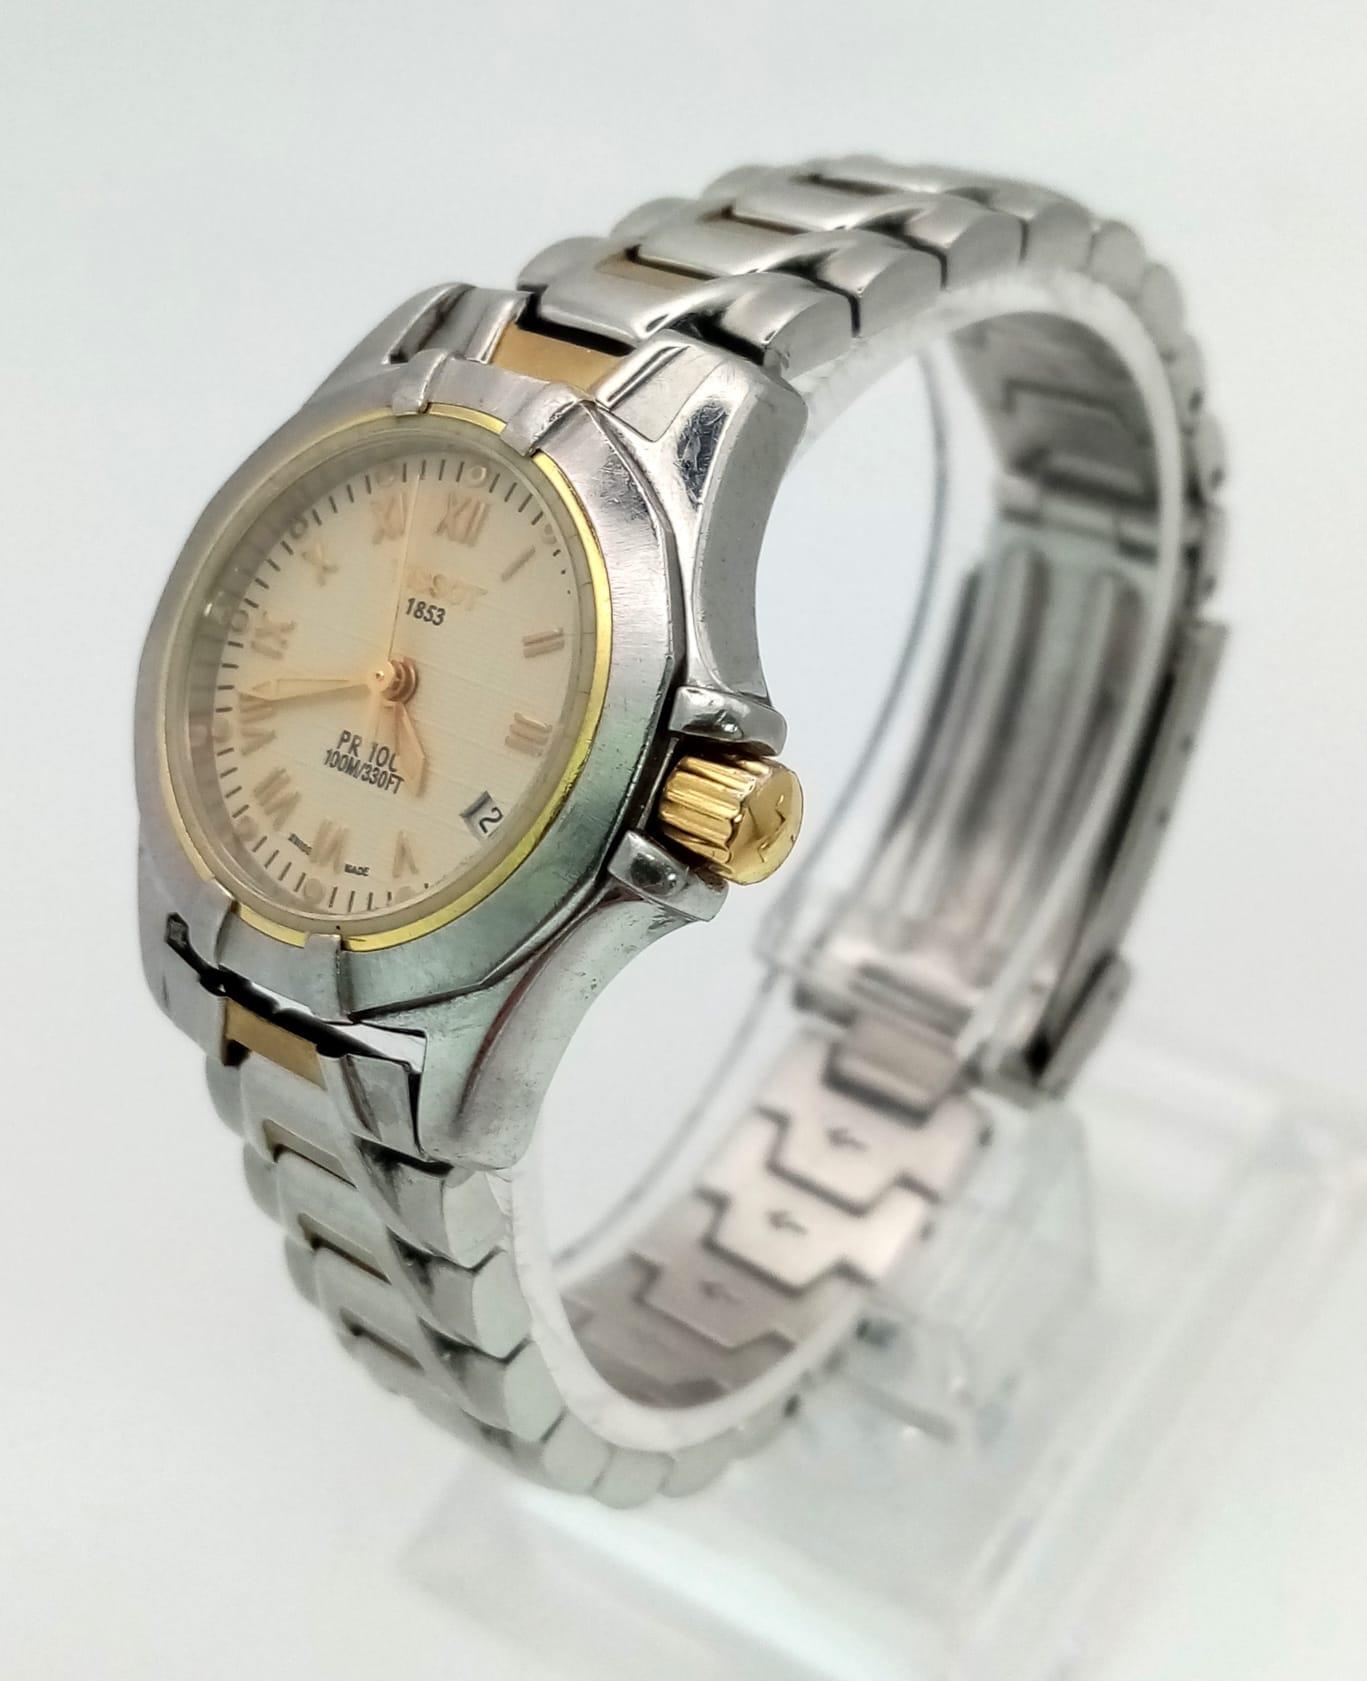 A Tissot 1853 PR 100 Two-Tone Ladies Watch. Water resistant to 100m. Case - 25mm. Quartz movement. - Image 2 of 5